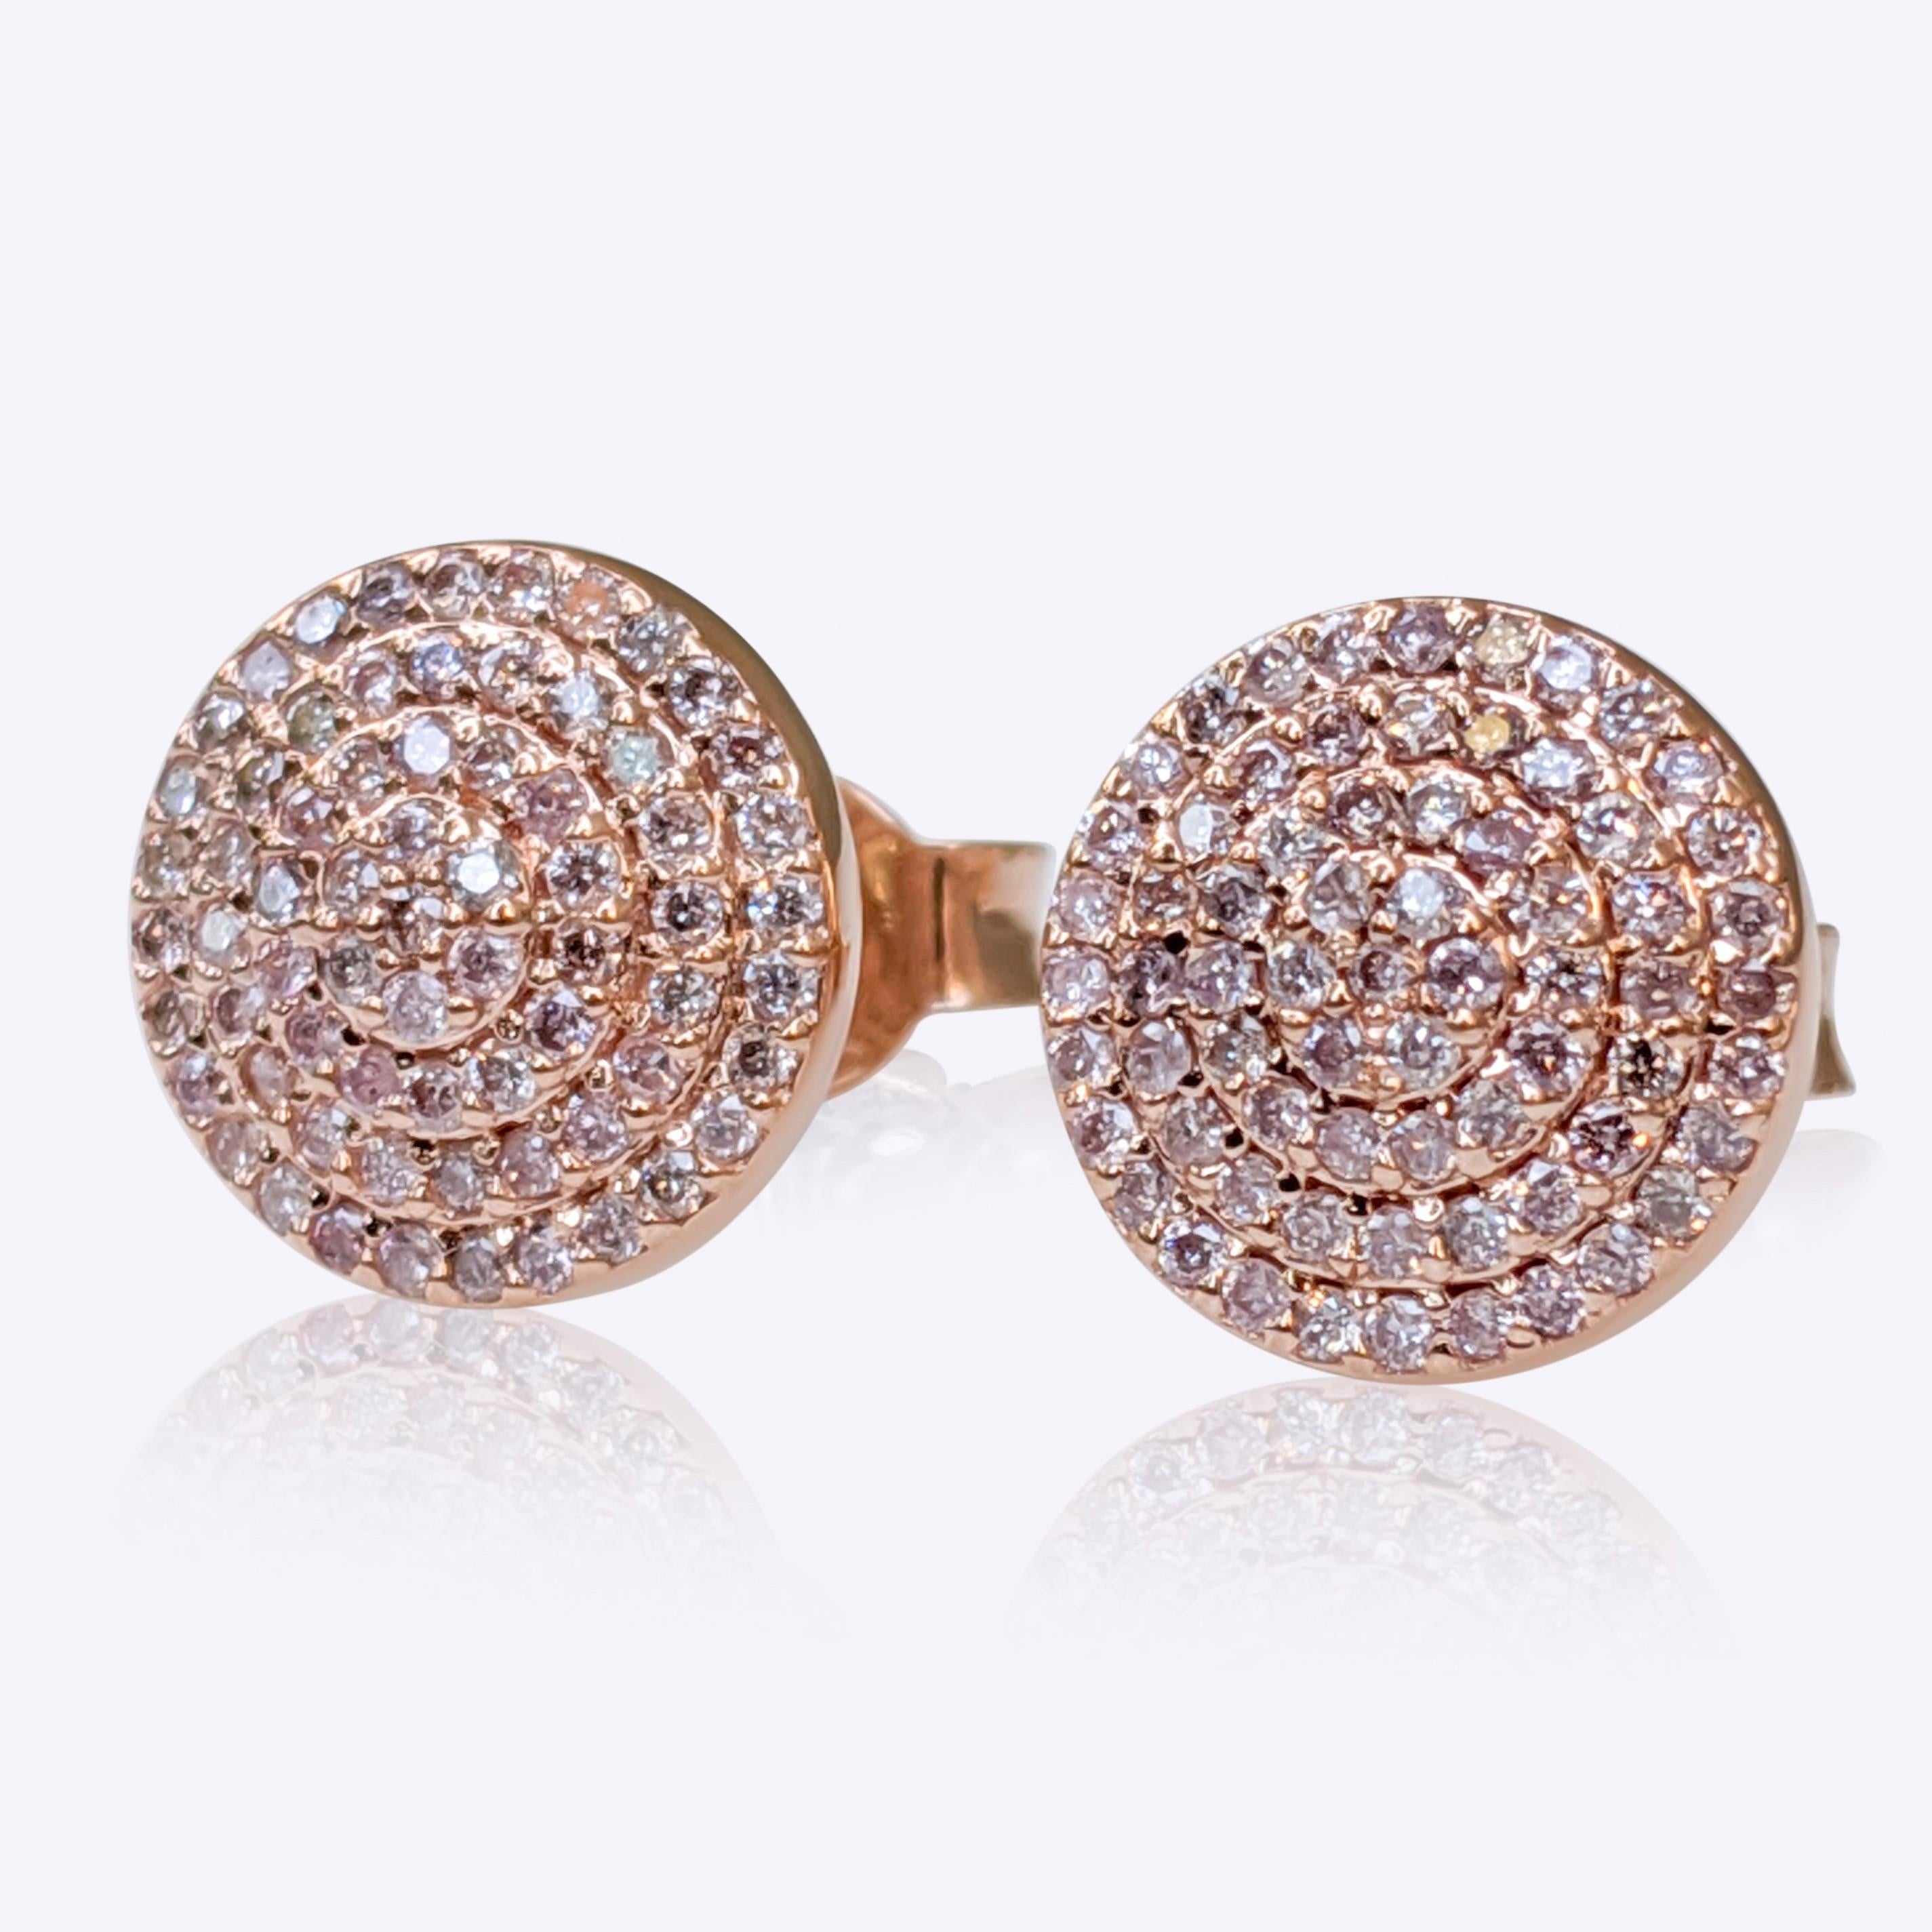 NO RESERVE! 0.30 Carat Fancy Pink Diamond - 14 kt. Pink gold - Earrings 1